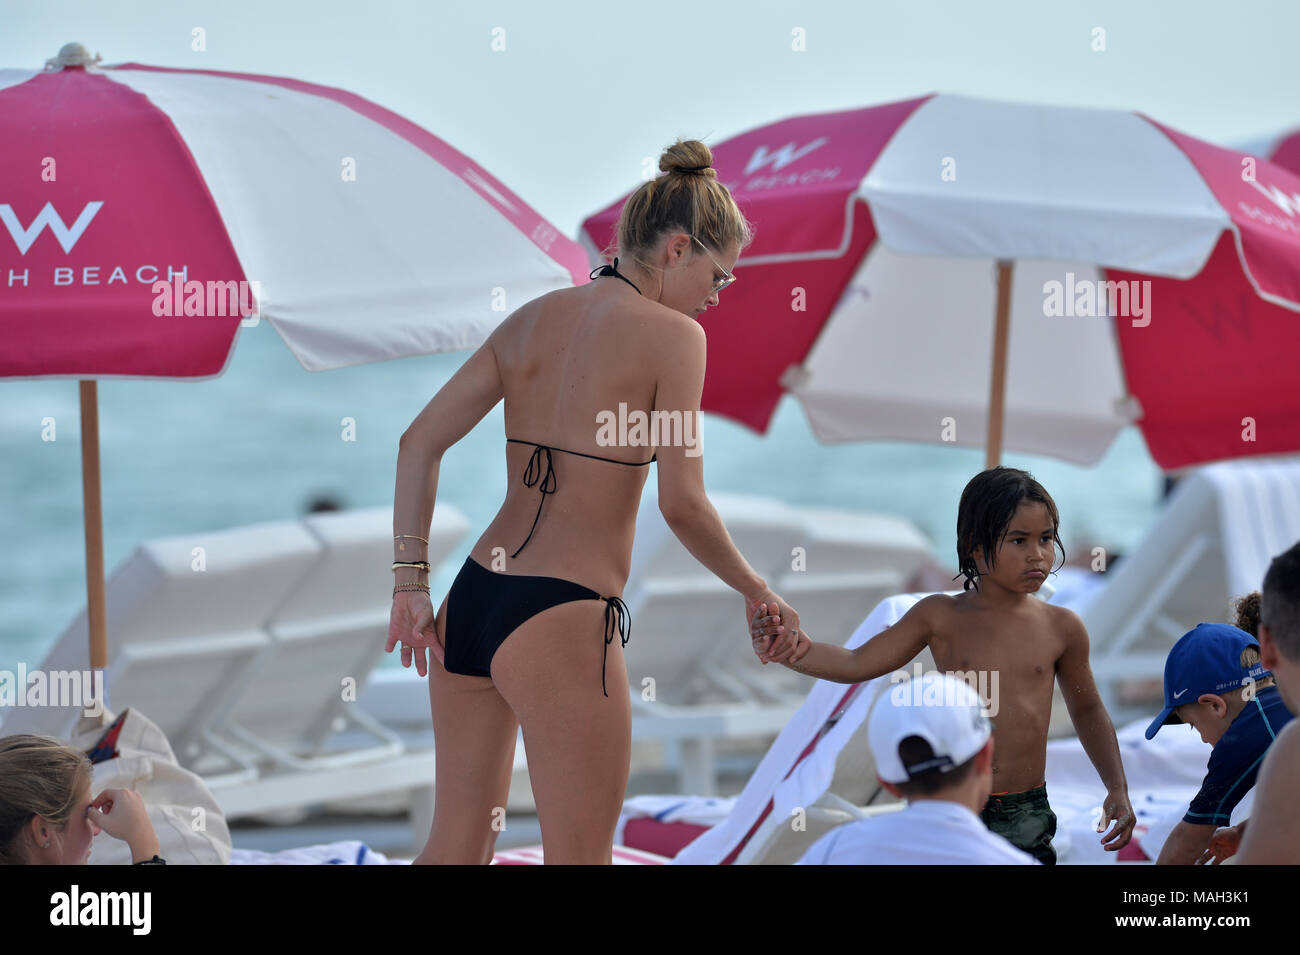 Skimpy Bikini High Resolution Stock Photography and Images - Alamy